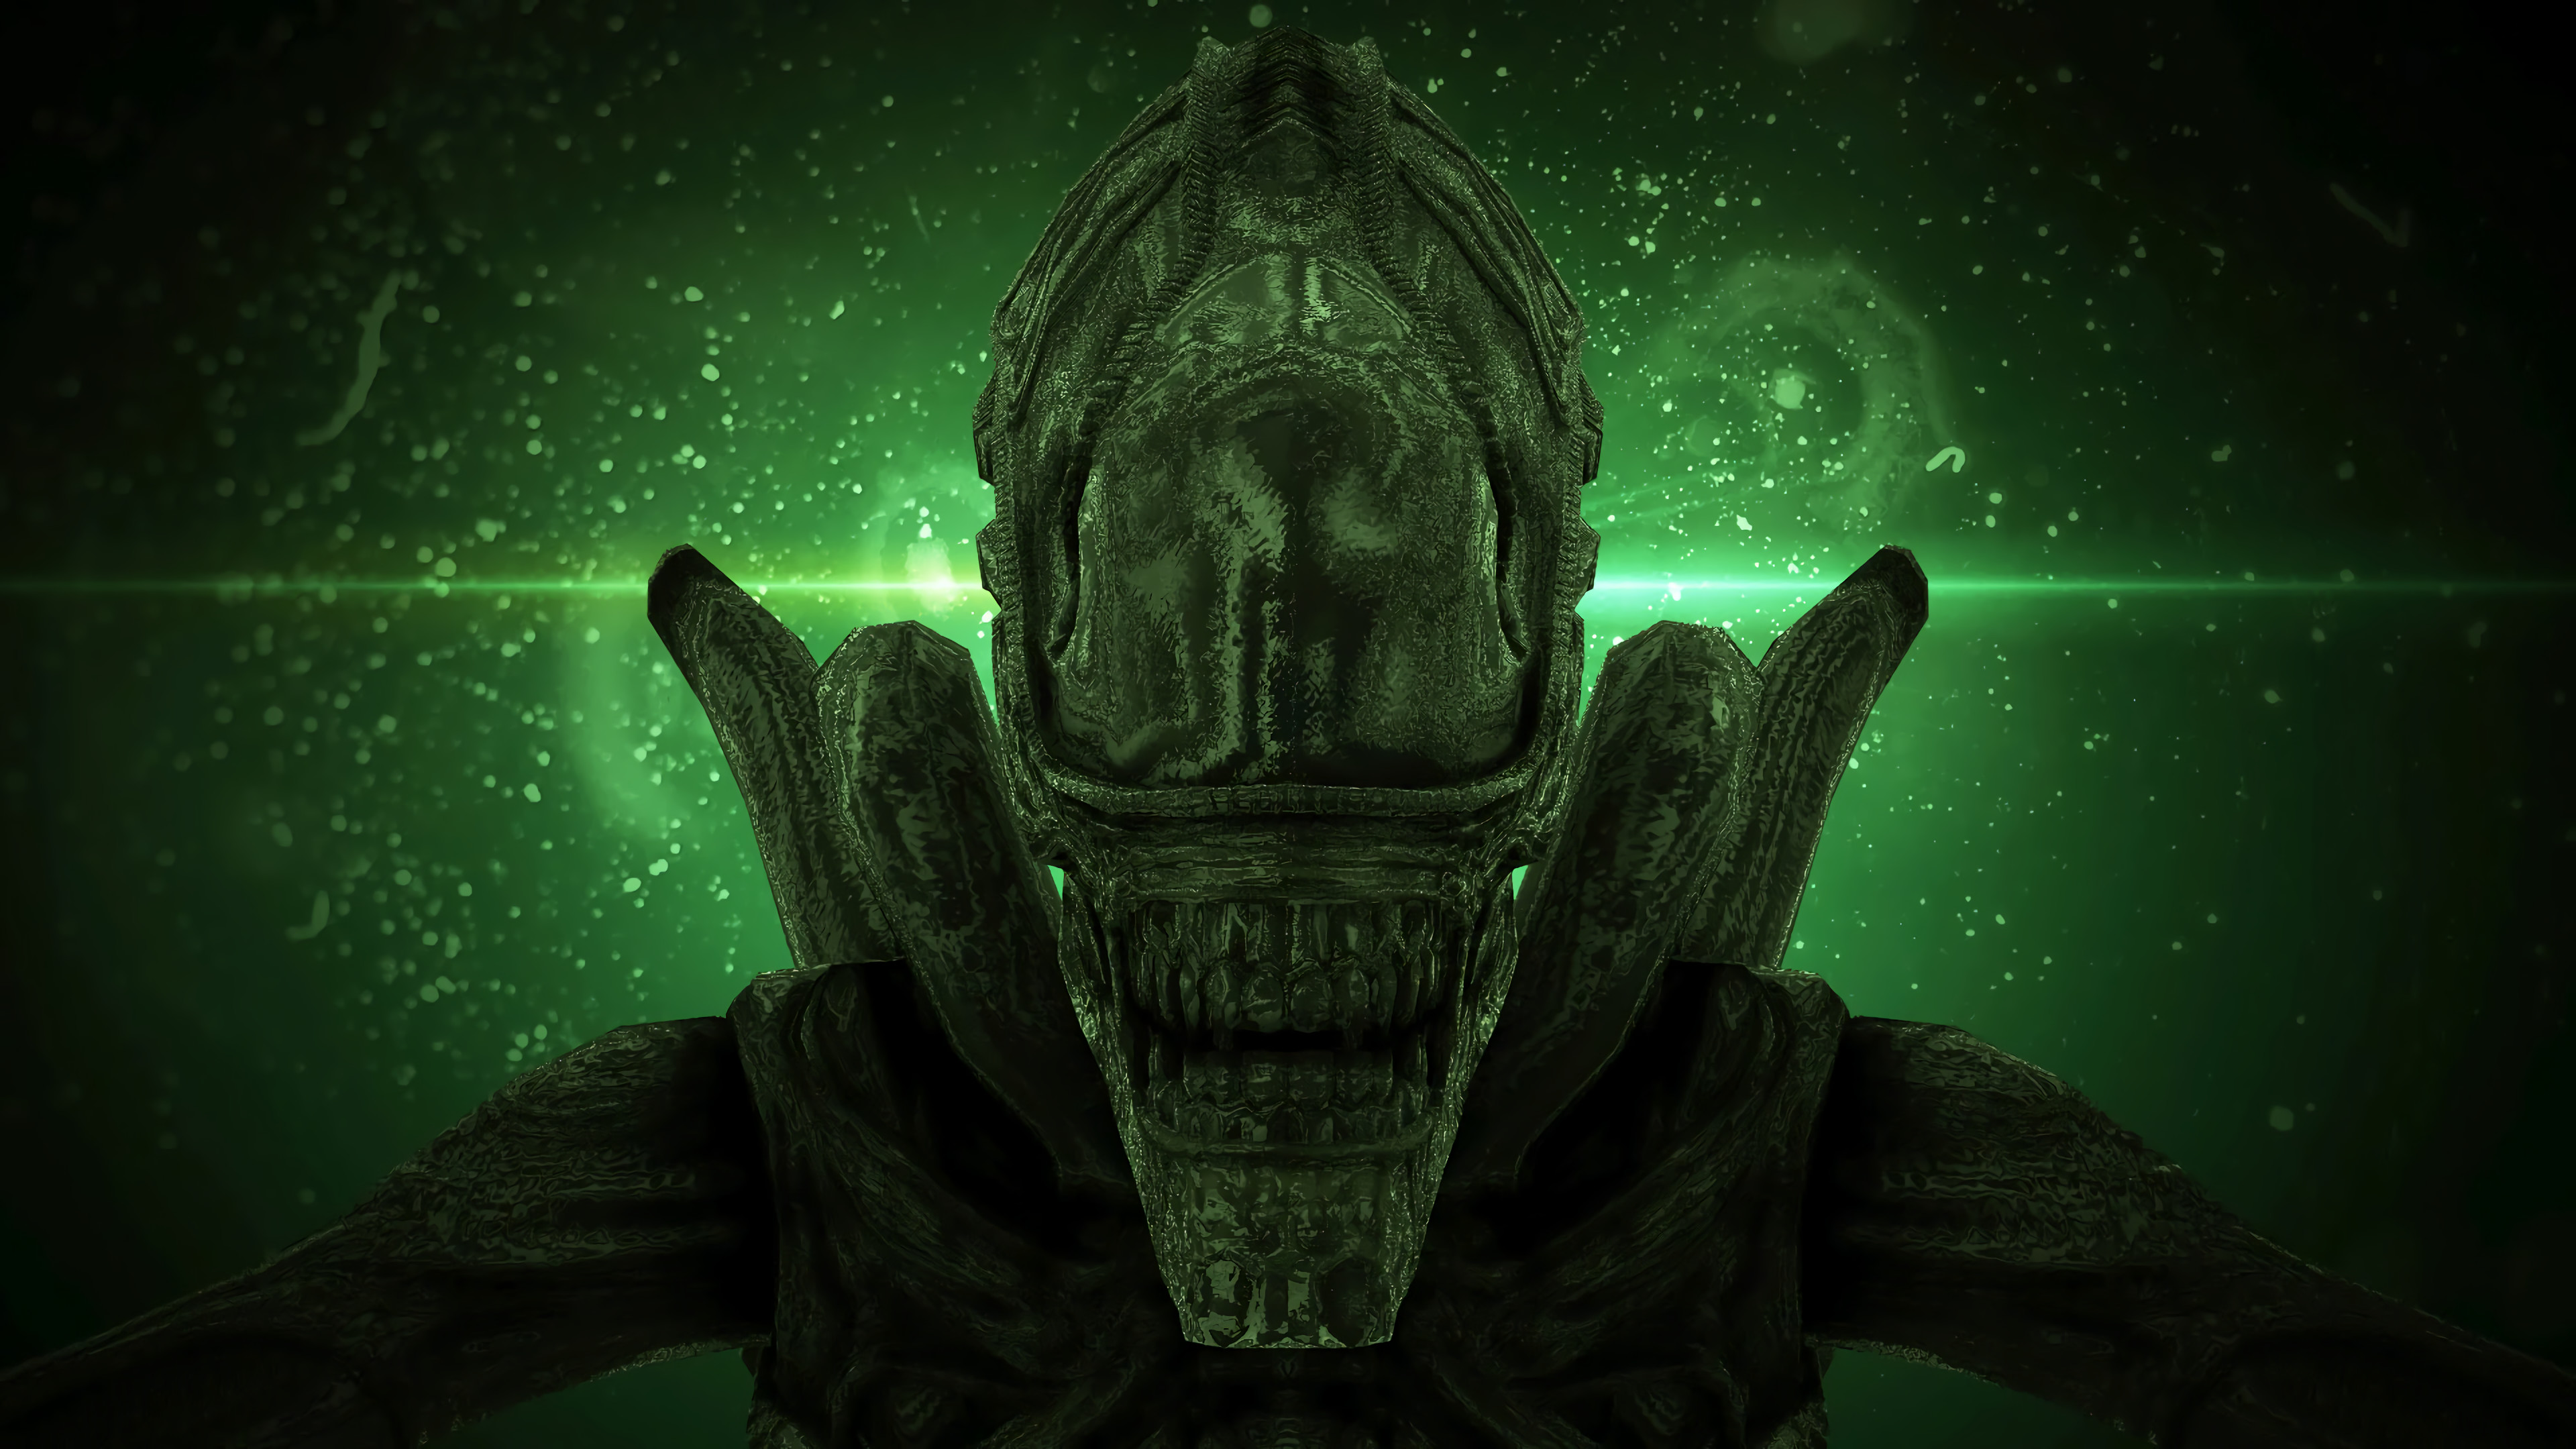 3840x2160 Alien: Covenant 4k Ultra HD Wallpaper | Hintergrund |  | ID:738655  - Wallpaper Abyss